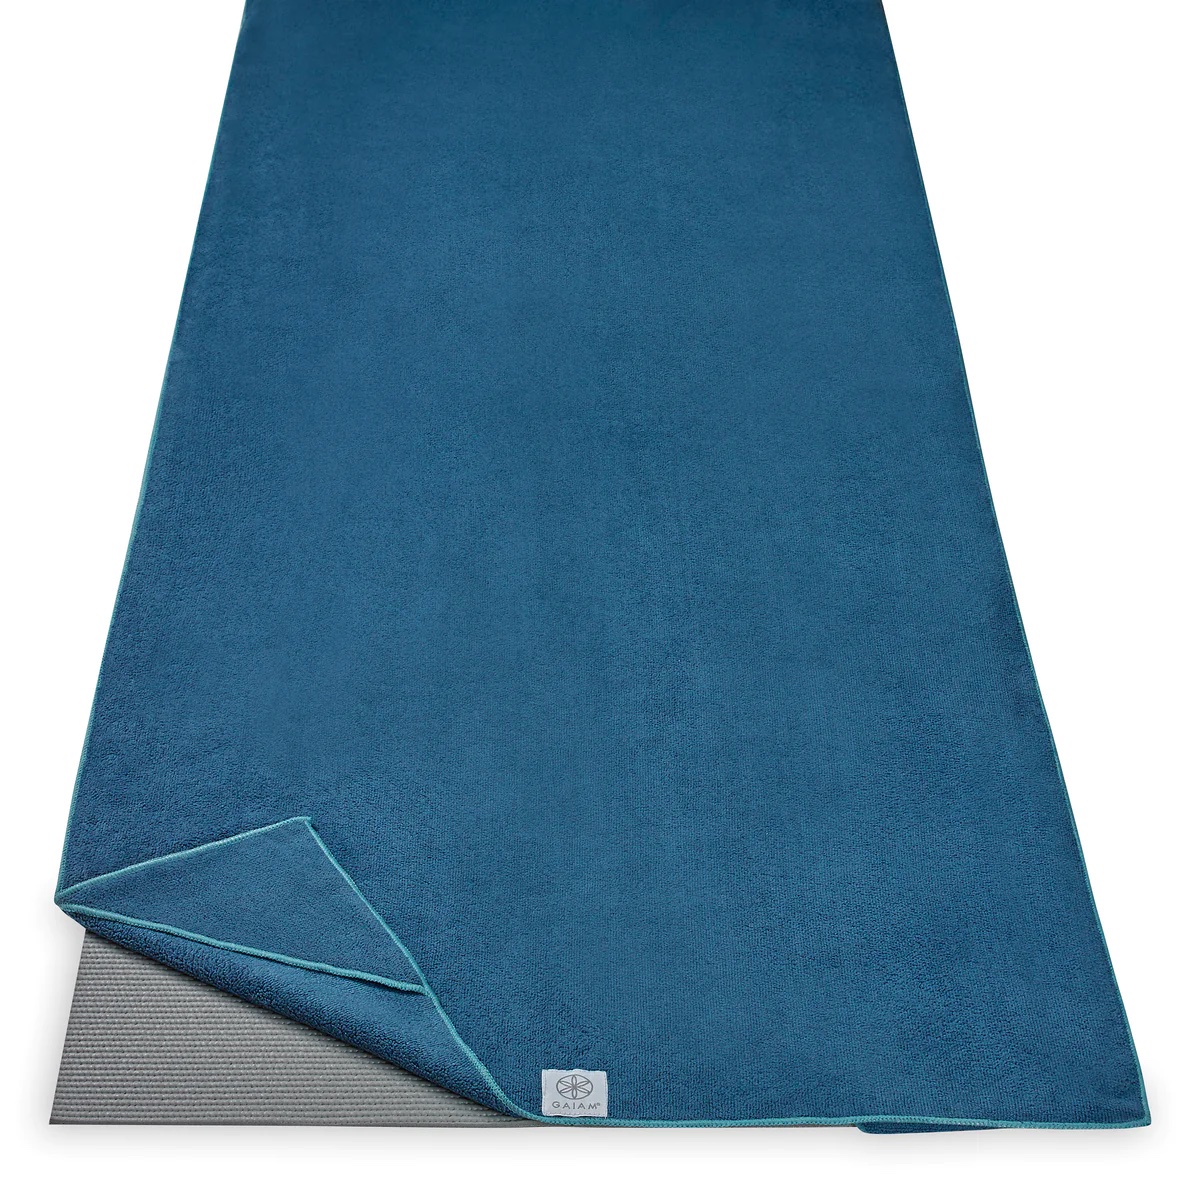 Yoga Mat (and Towel) Mania!